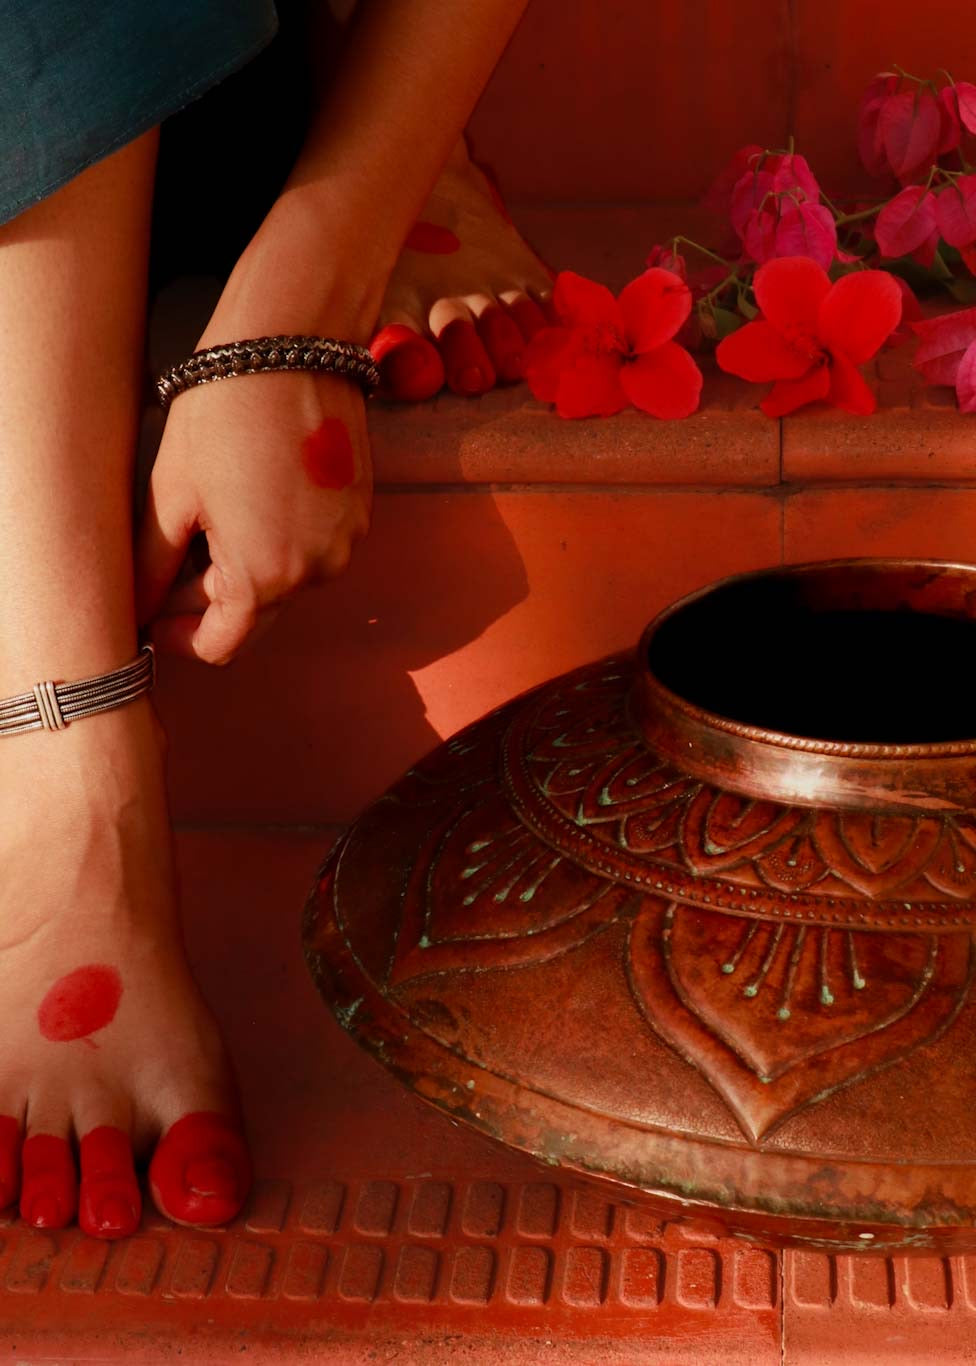 Copper embossed Vase kept on floor next to a women adoring jewellery